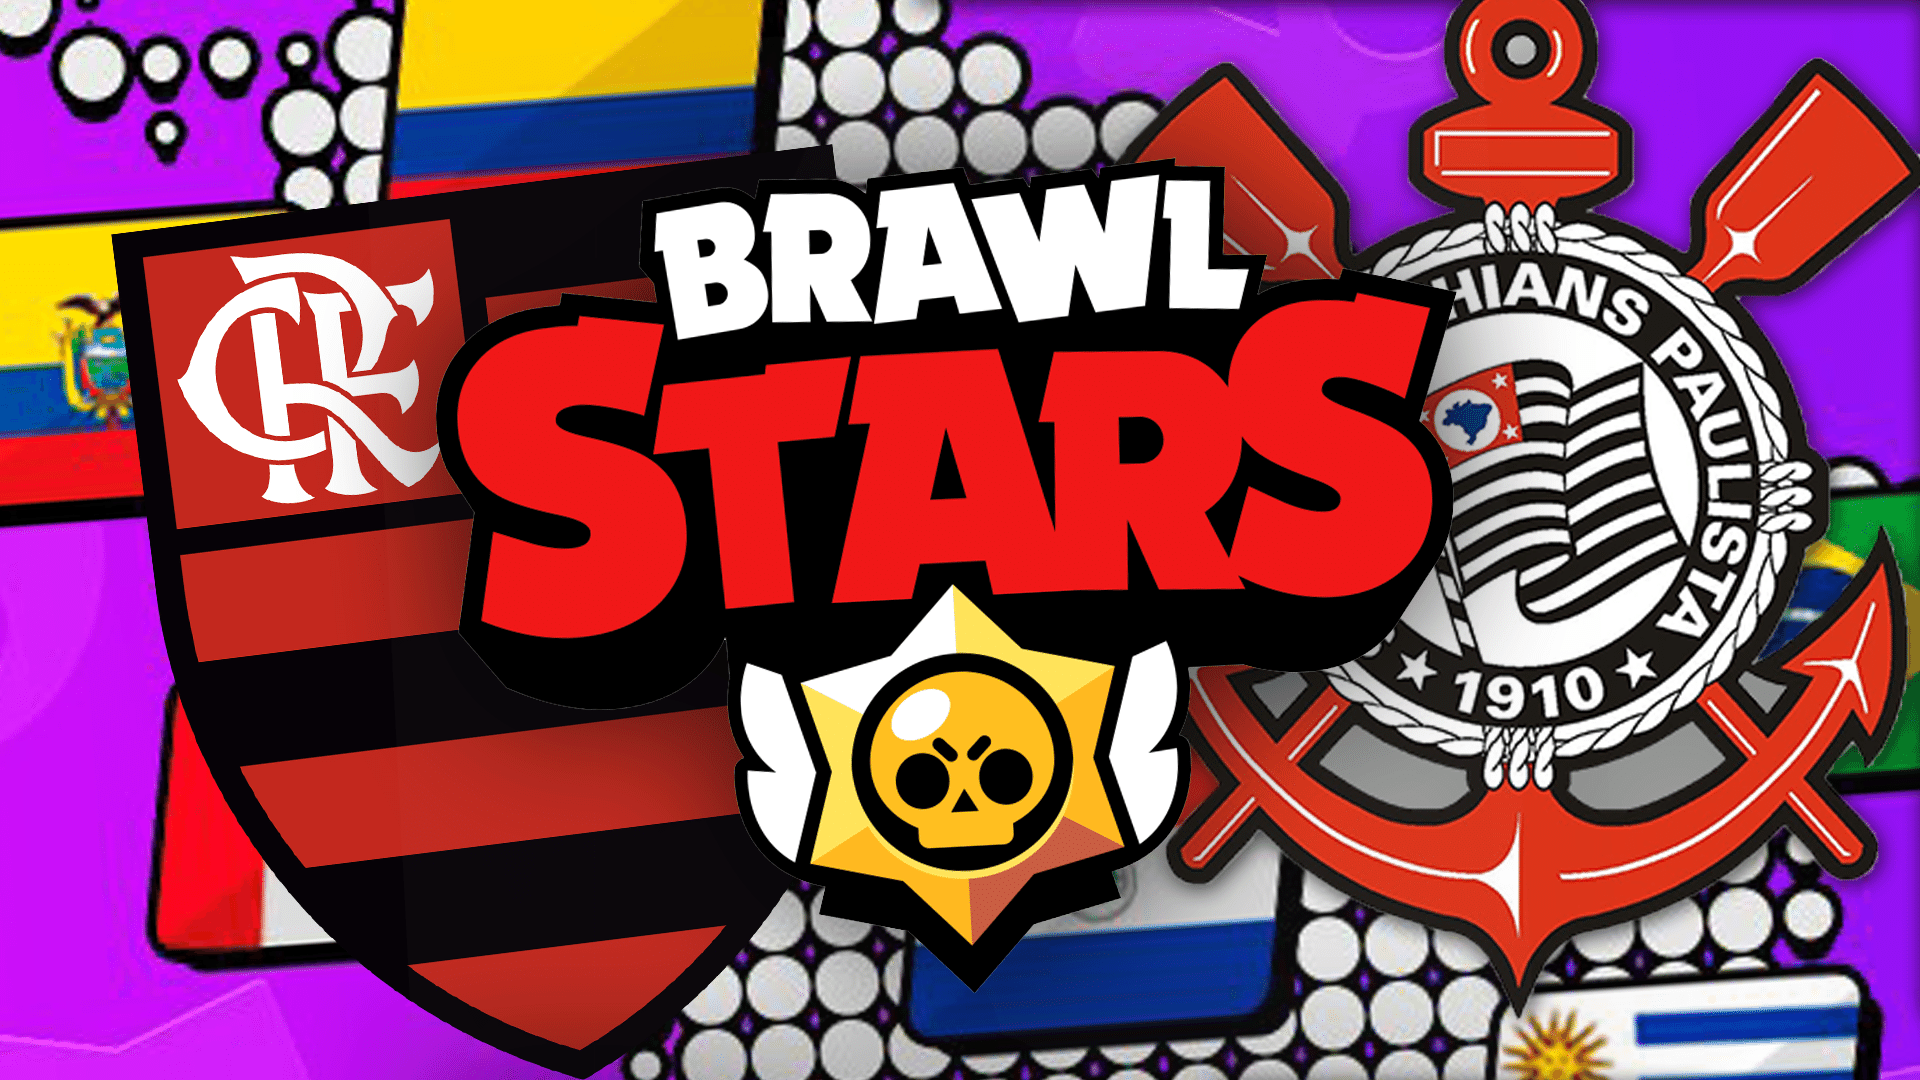 Corinthians E Flamengo Disputam Brawl Stars Master League Veja Times - brasileiro campeao brawl stars